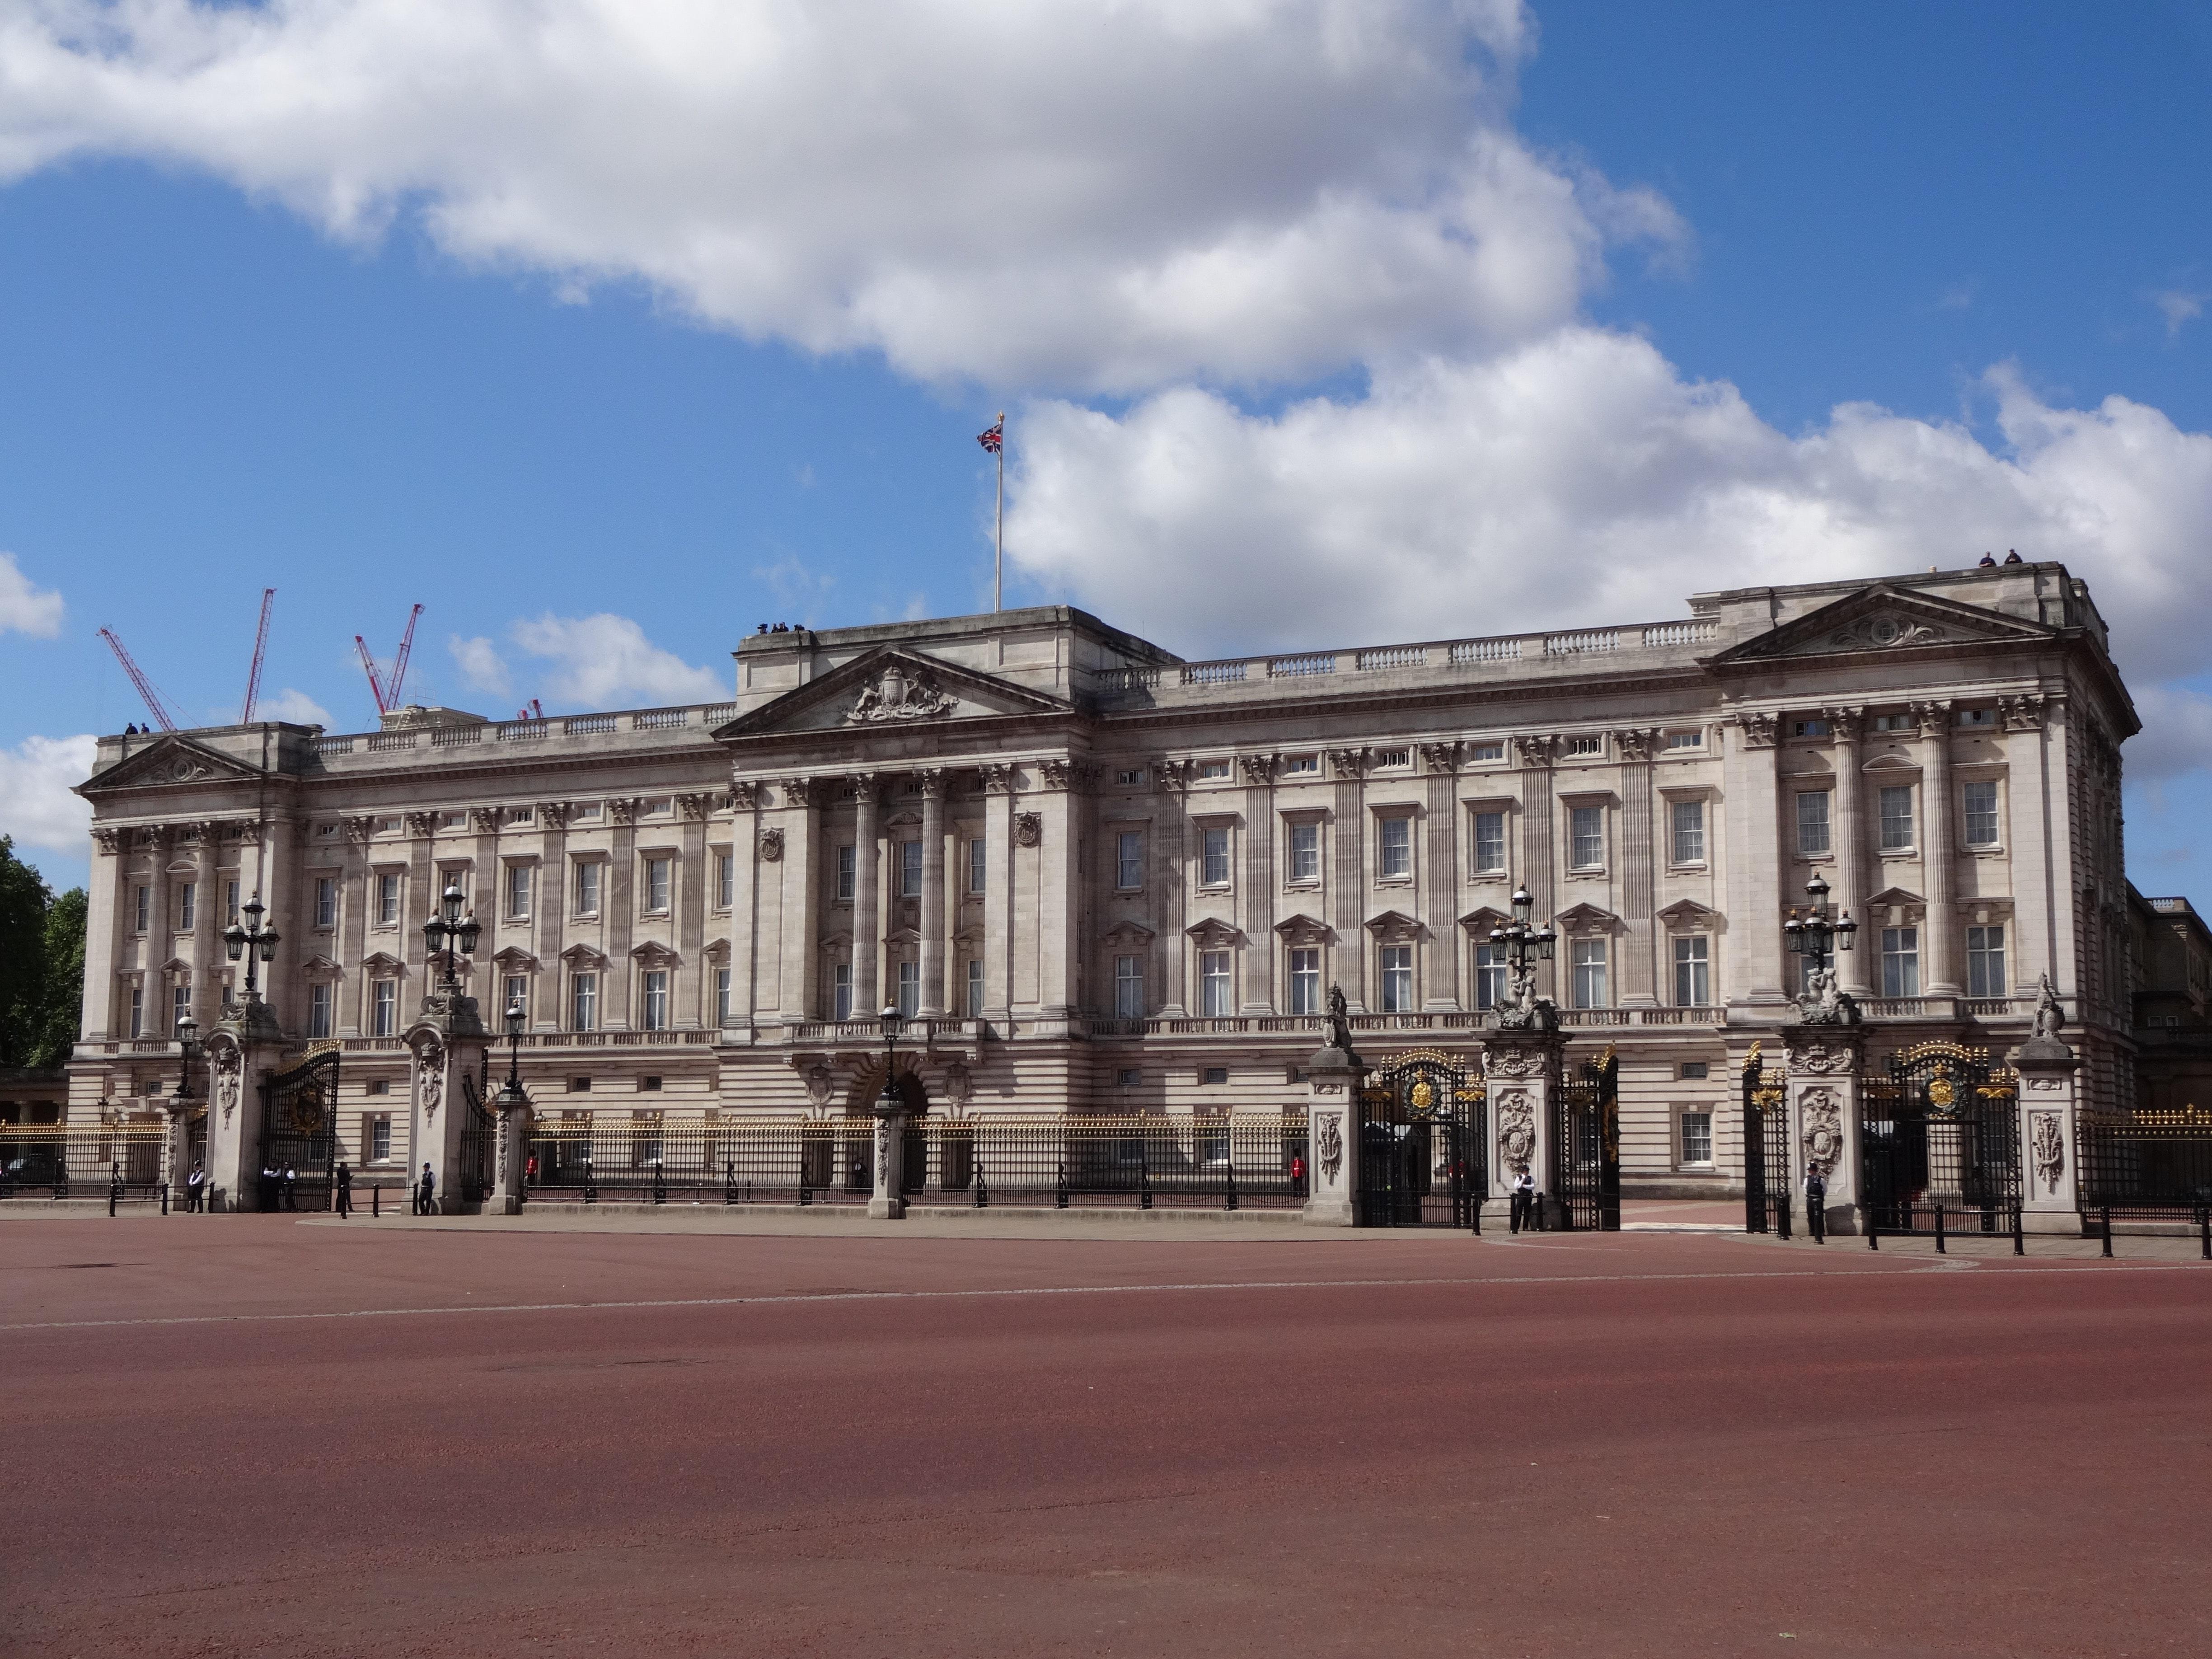  How Many Floors Does Buckingham Palace Have 